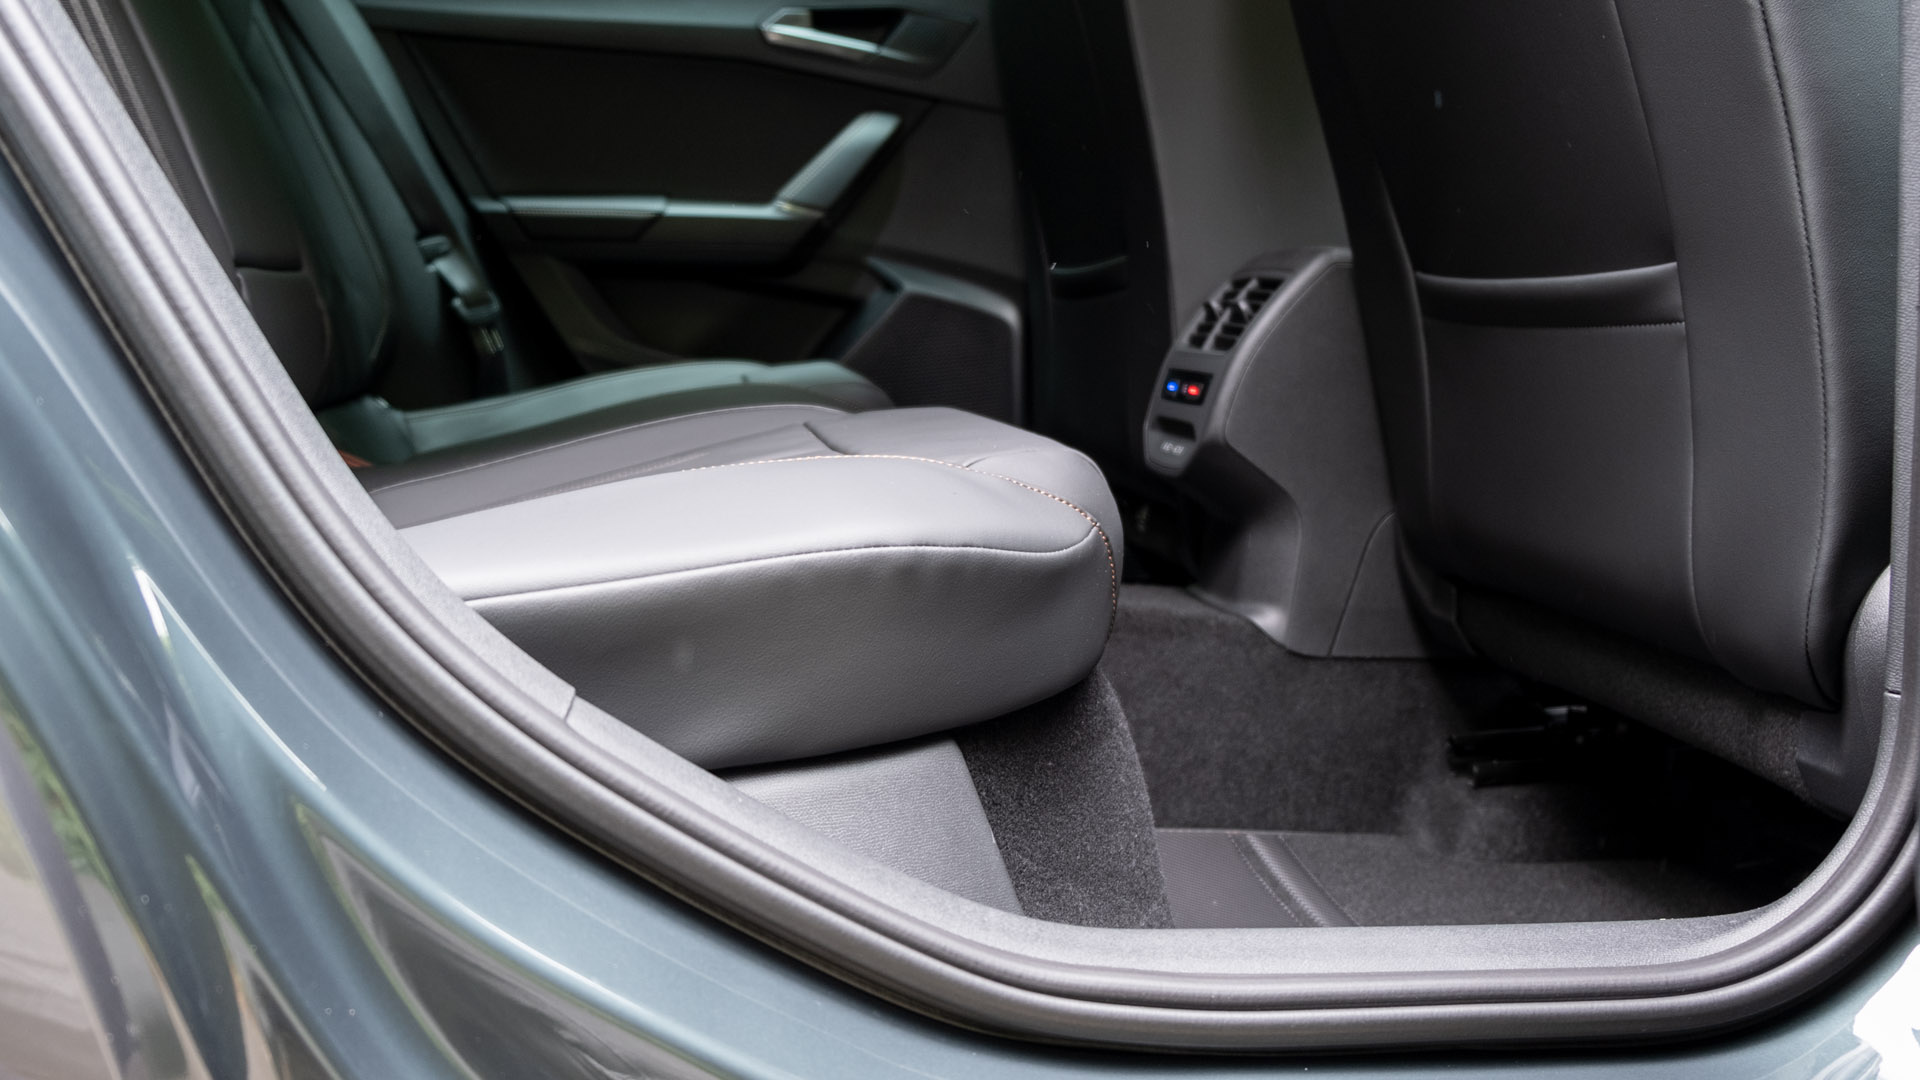 Cupra Formentor rear seat comfort